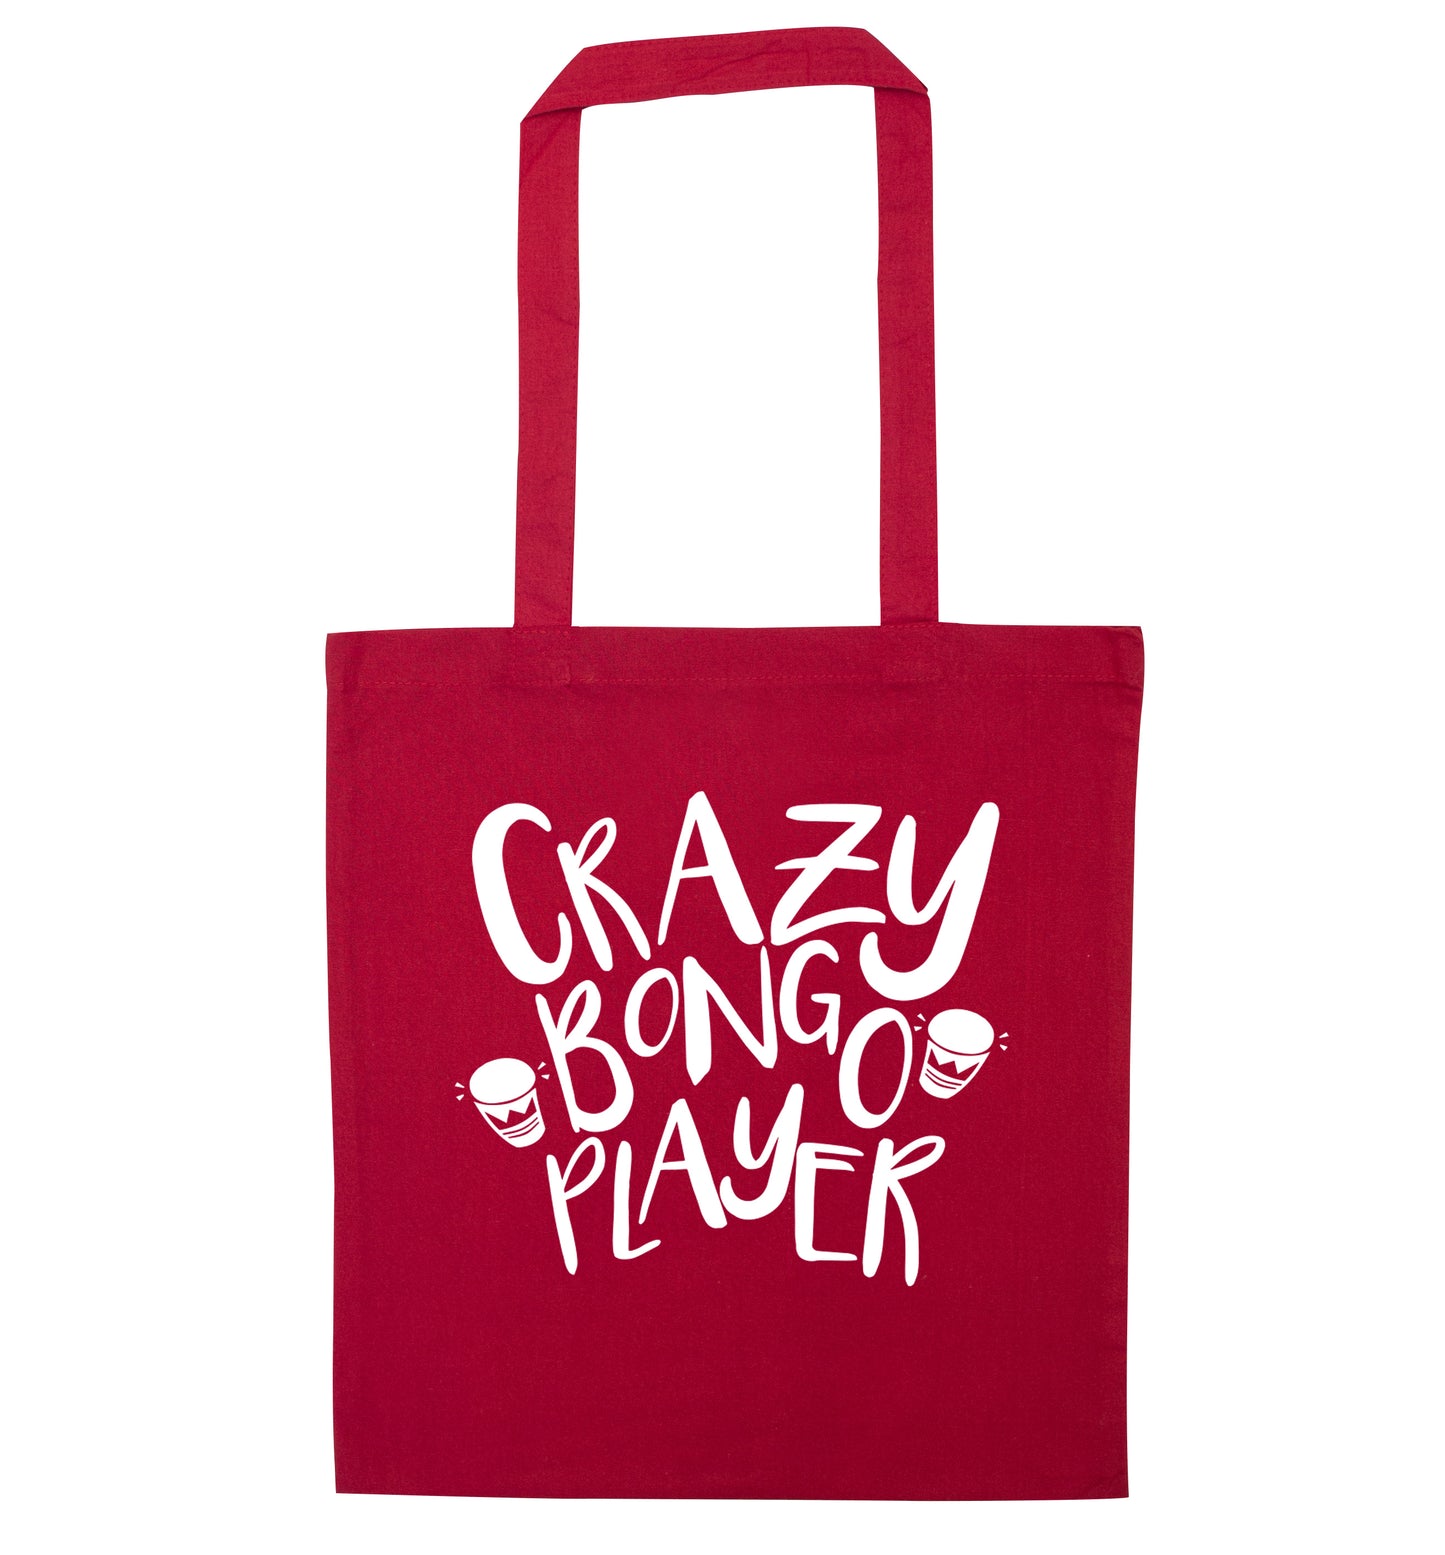 Crazy bongo player red tote bag